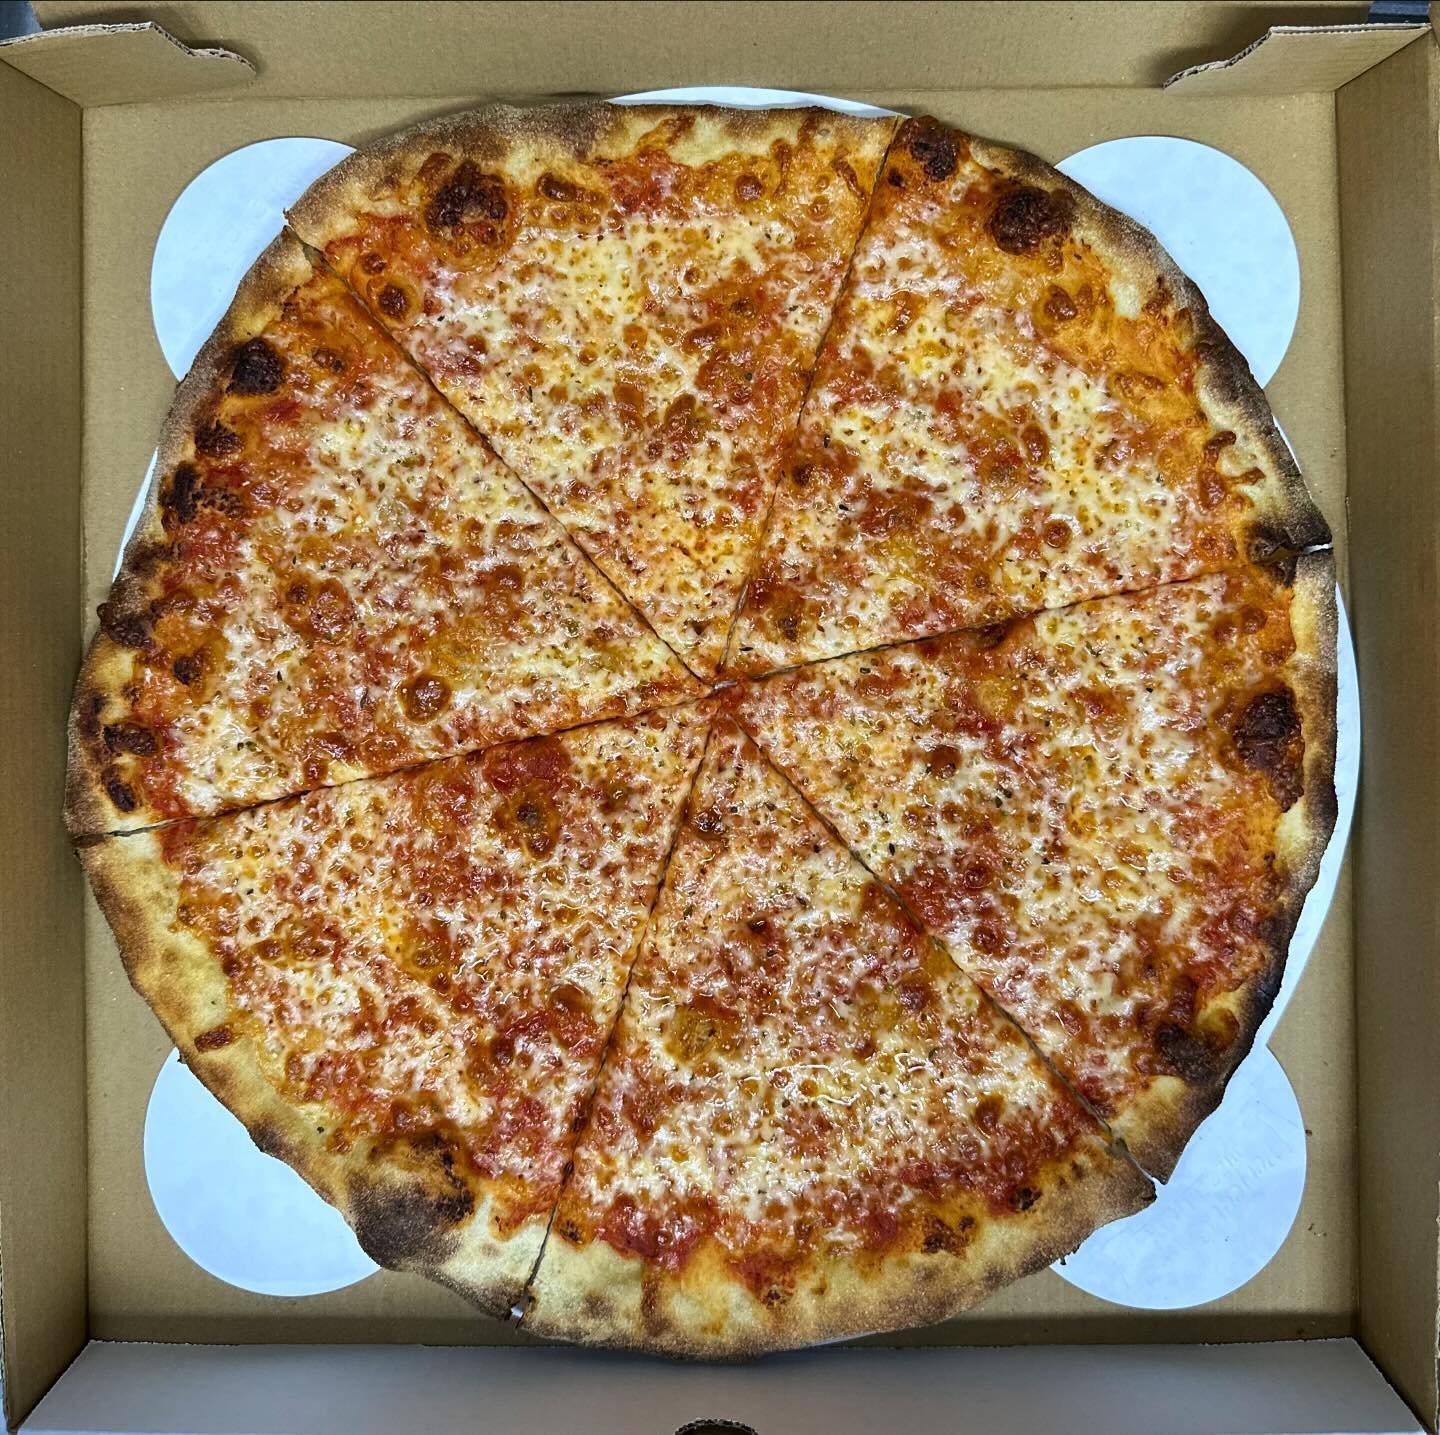 It&rsquo;s pizza Friday &amp; we are back at it today! 👉 3pm-8pm {or sold out} 🍕
.
.
.
#feralpizza #feralpizzaatx #austinpizza #atxpizza #pizzaatx #atxfoodtruck #austintexas #austintx #atx #hydepark #hydeparkatx #atxfood #atxpizzeria #pizza #pizzer